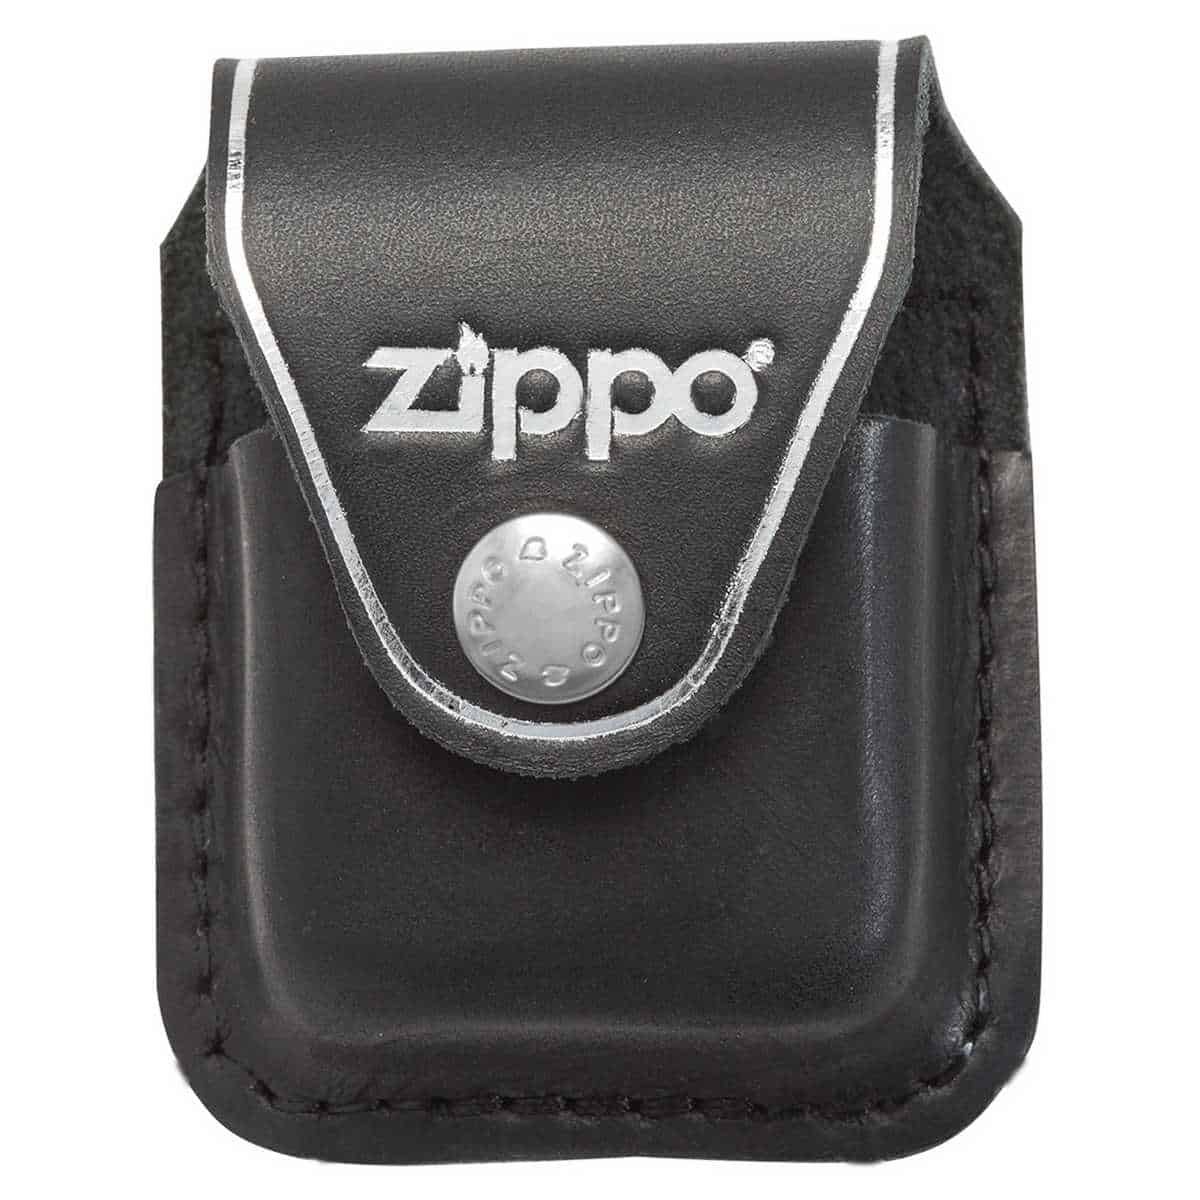 Zippo Lighter Pouch - Læder etui sort